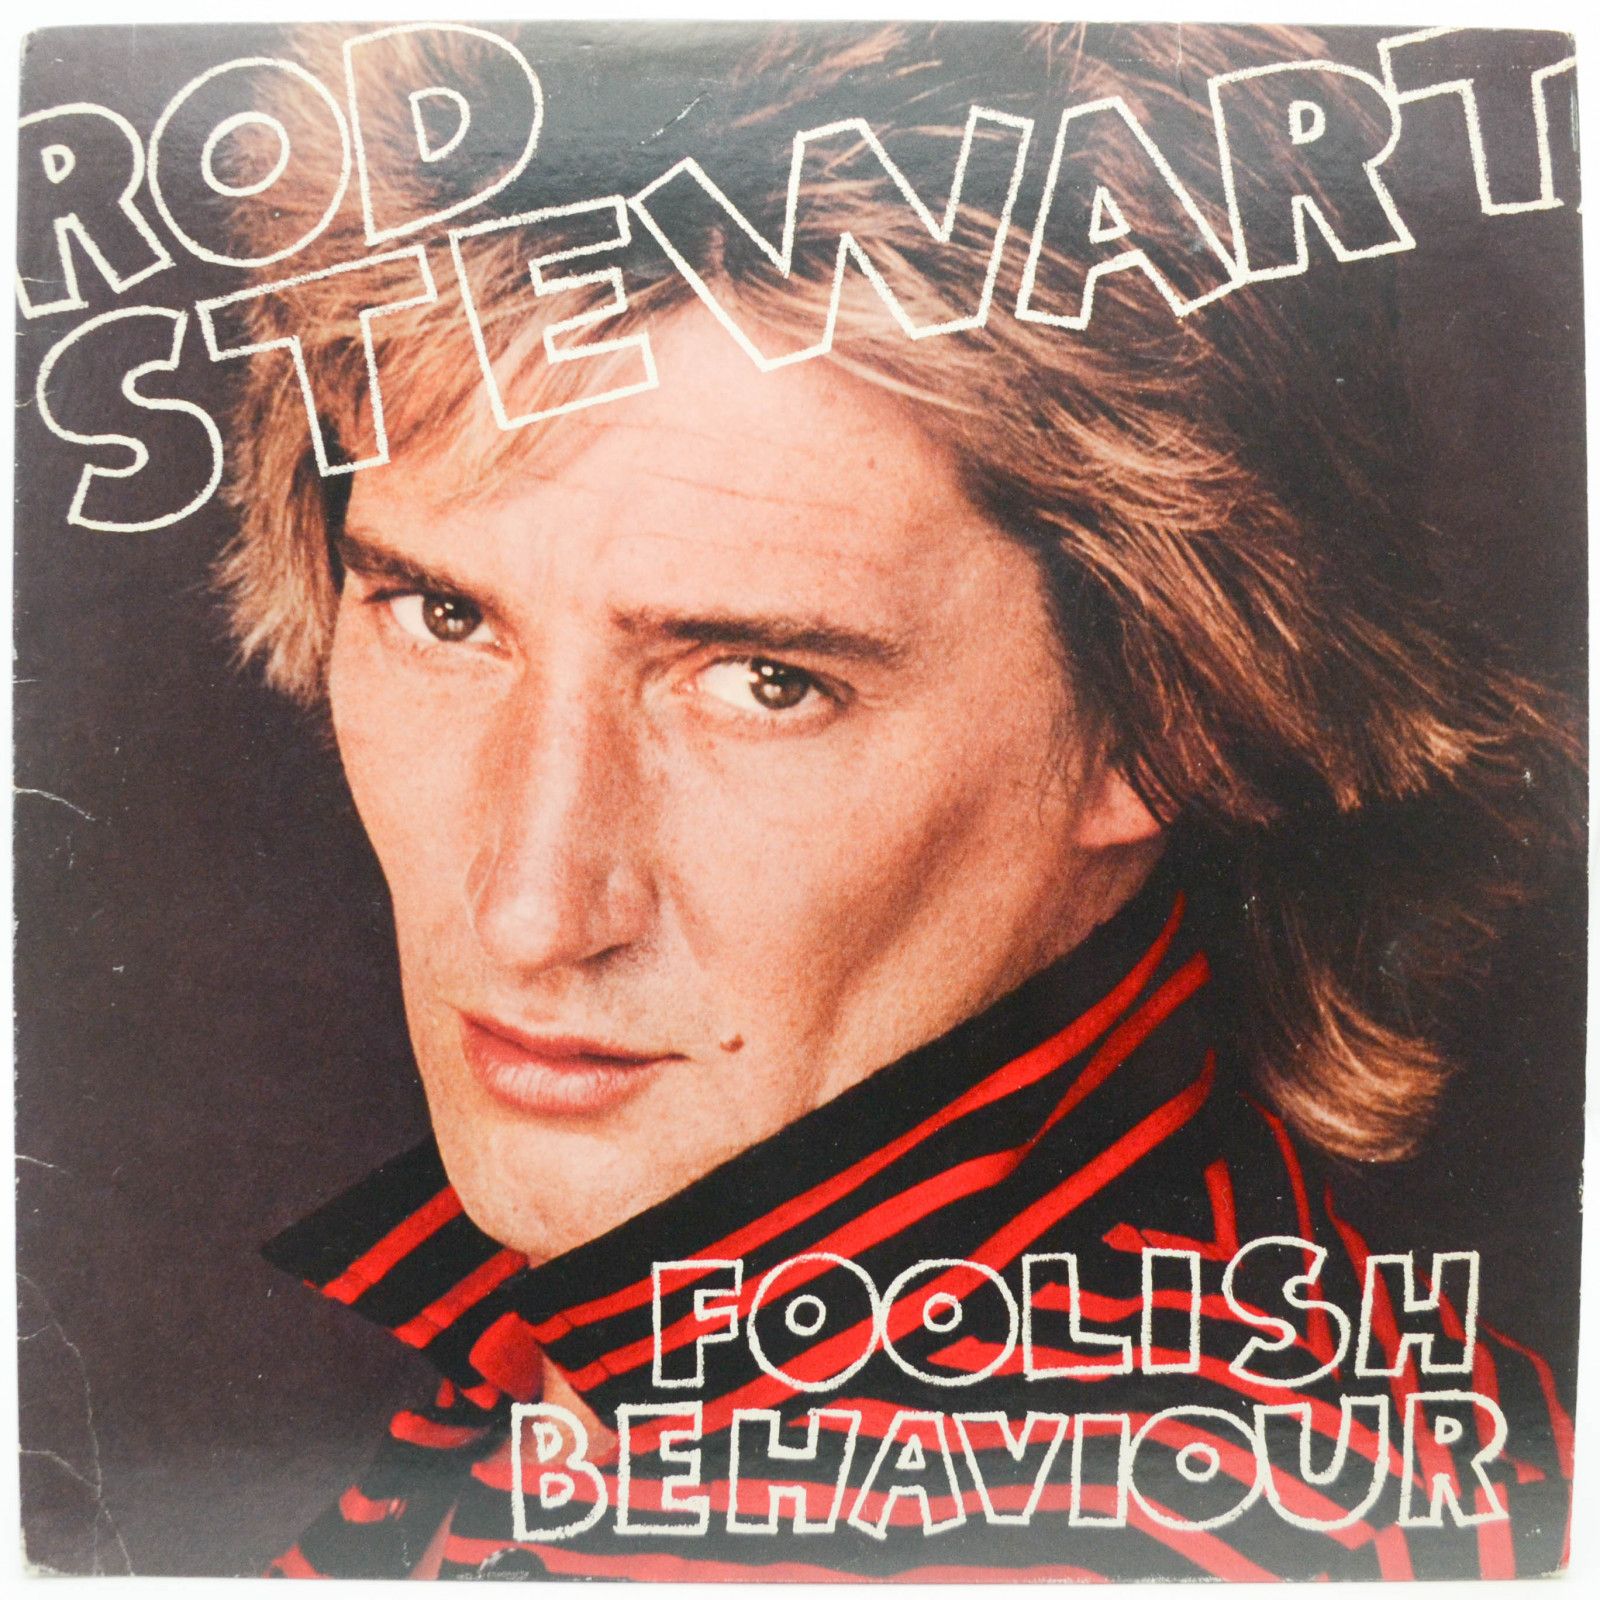 Rod Stewart — Foolish Behaviour (USA, poster), 1980